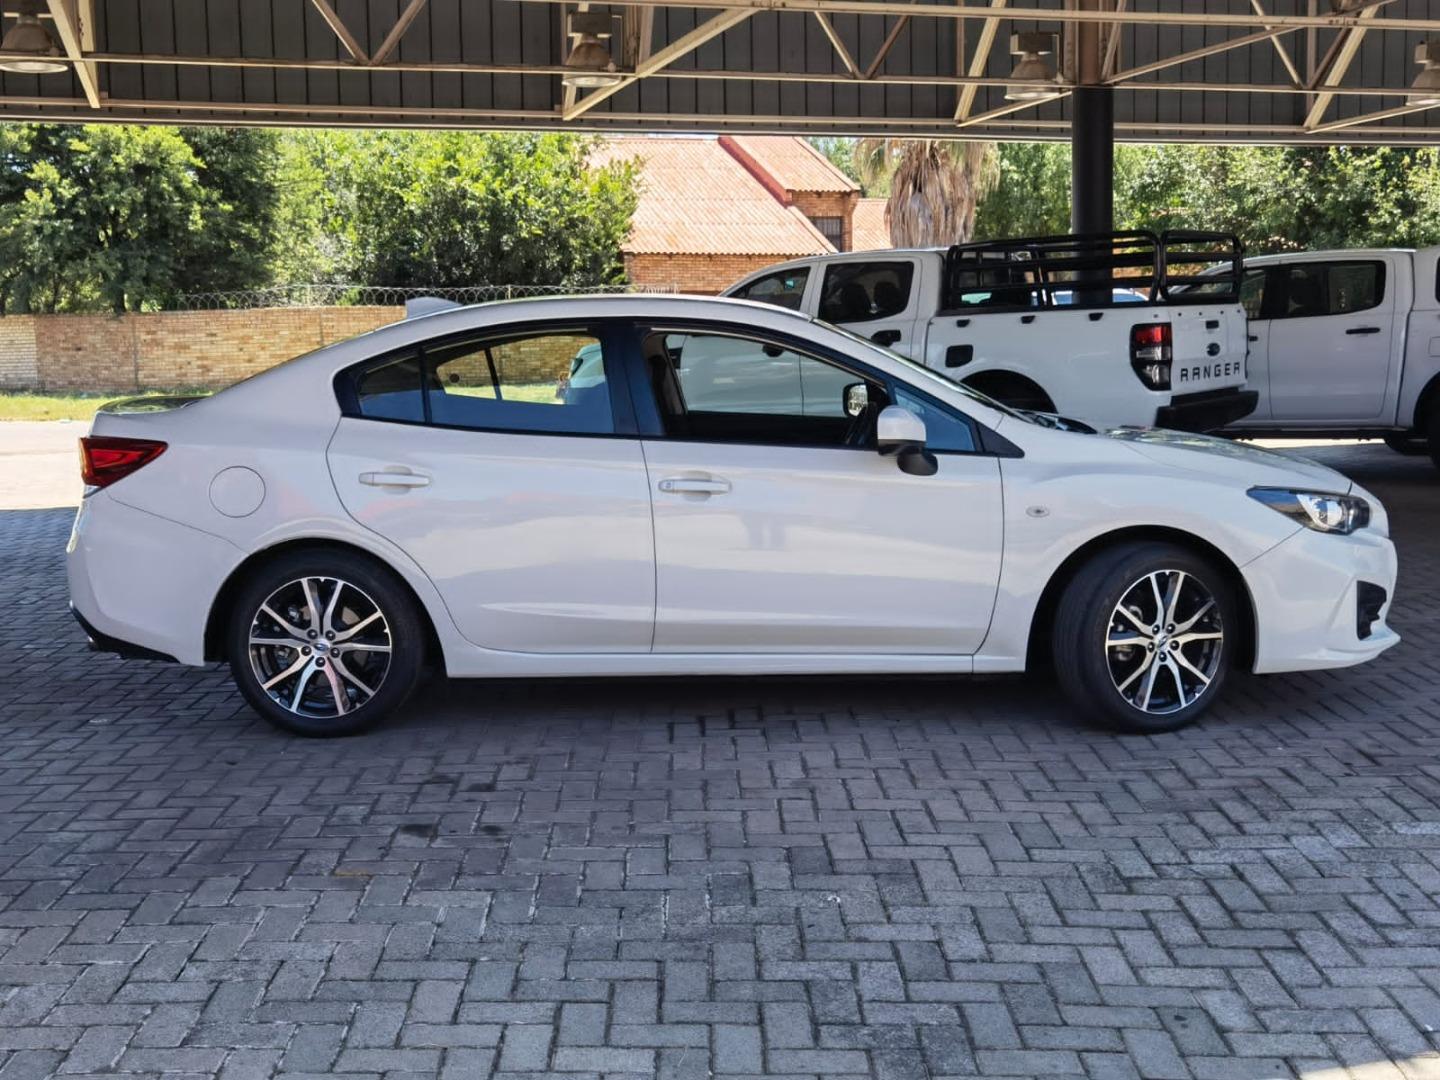 2019 Subaru Impreza side view 